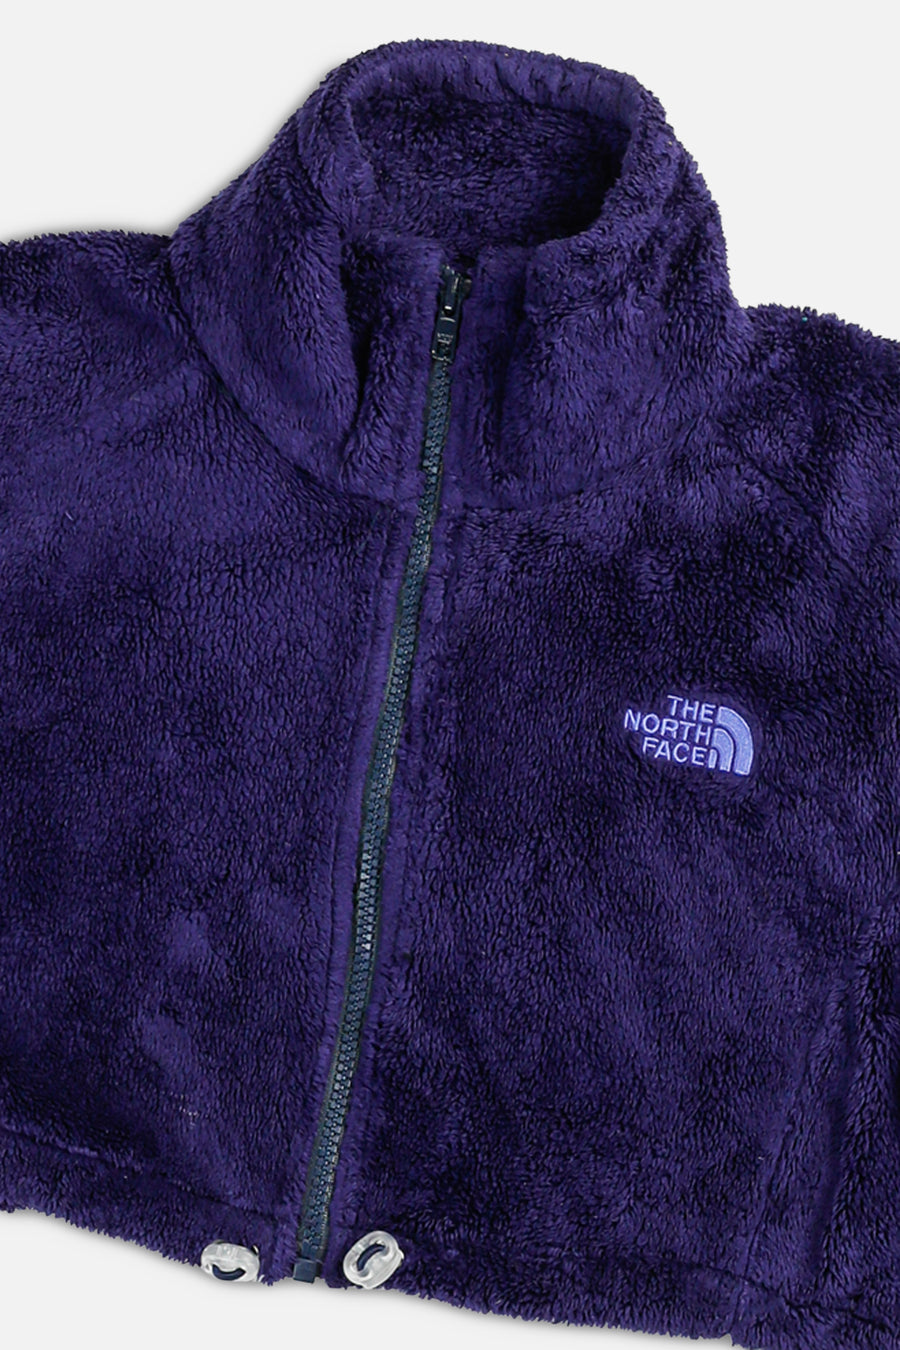 Rework North Face Crop Fleece Jacket - XS